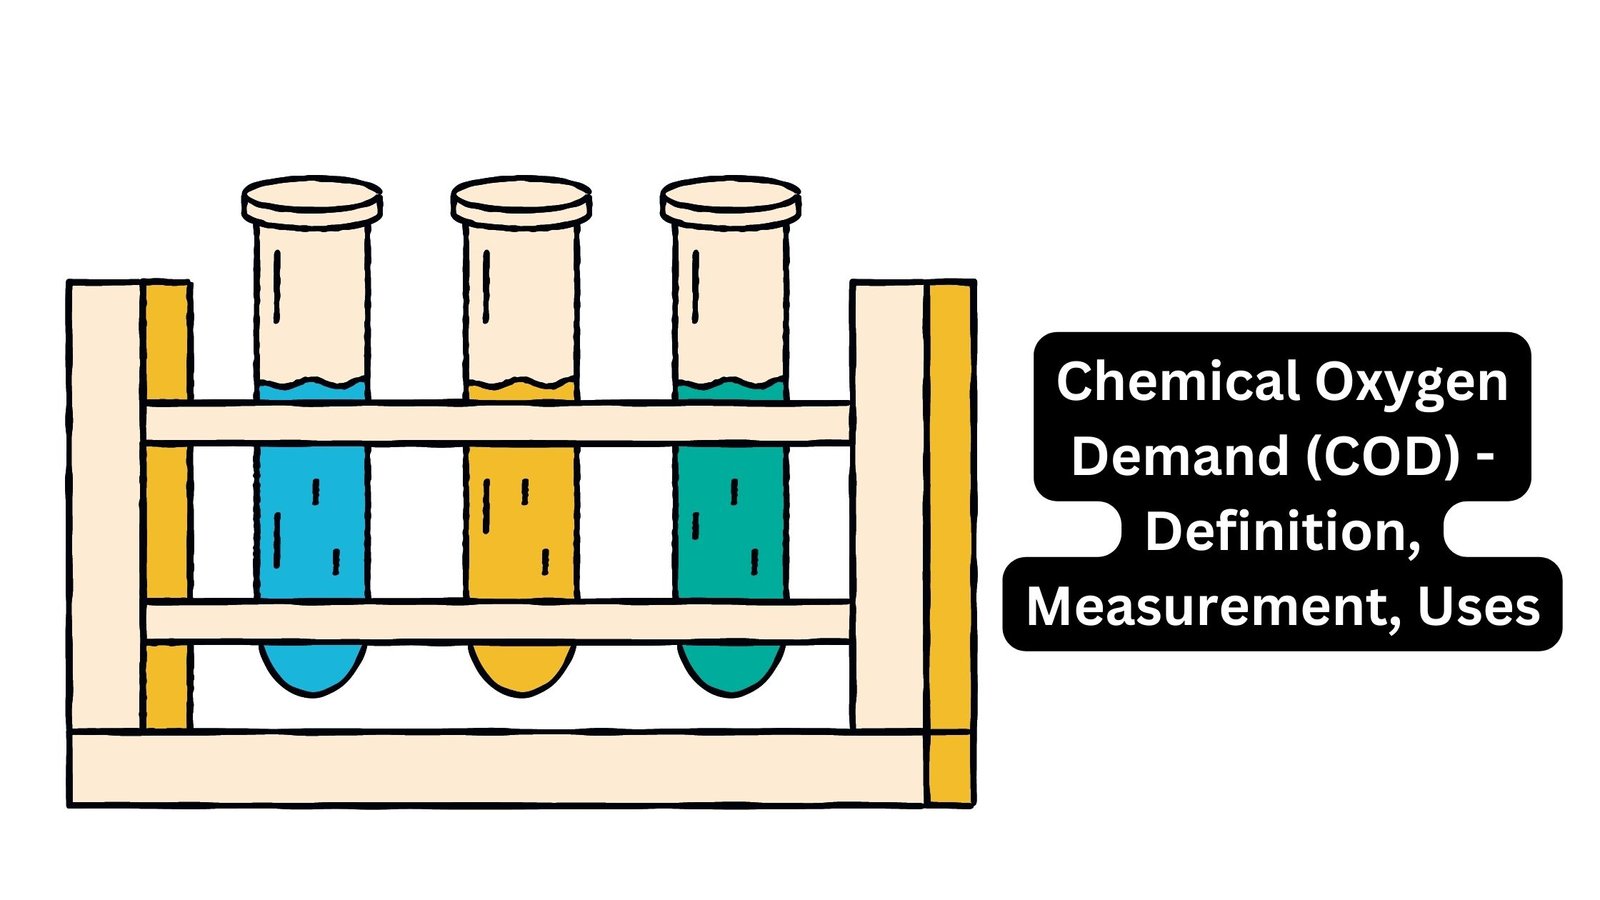 Chemical Oxygen Demand (COD) - Definition, Measurement, Uses